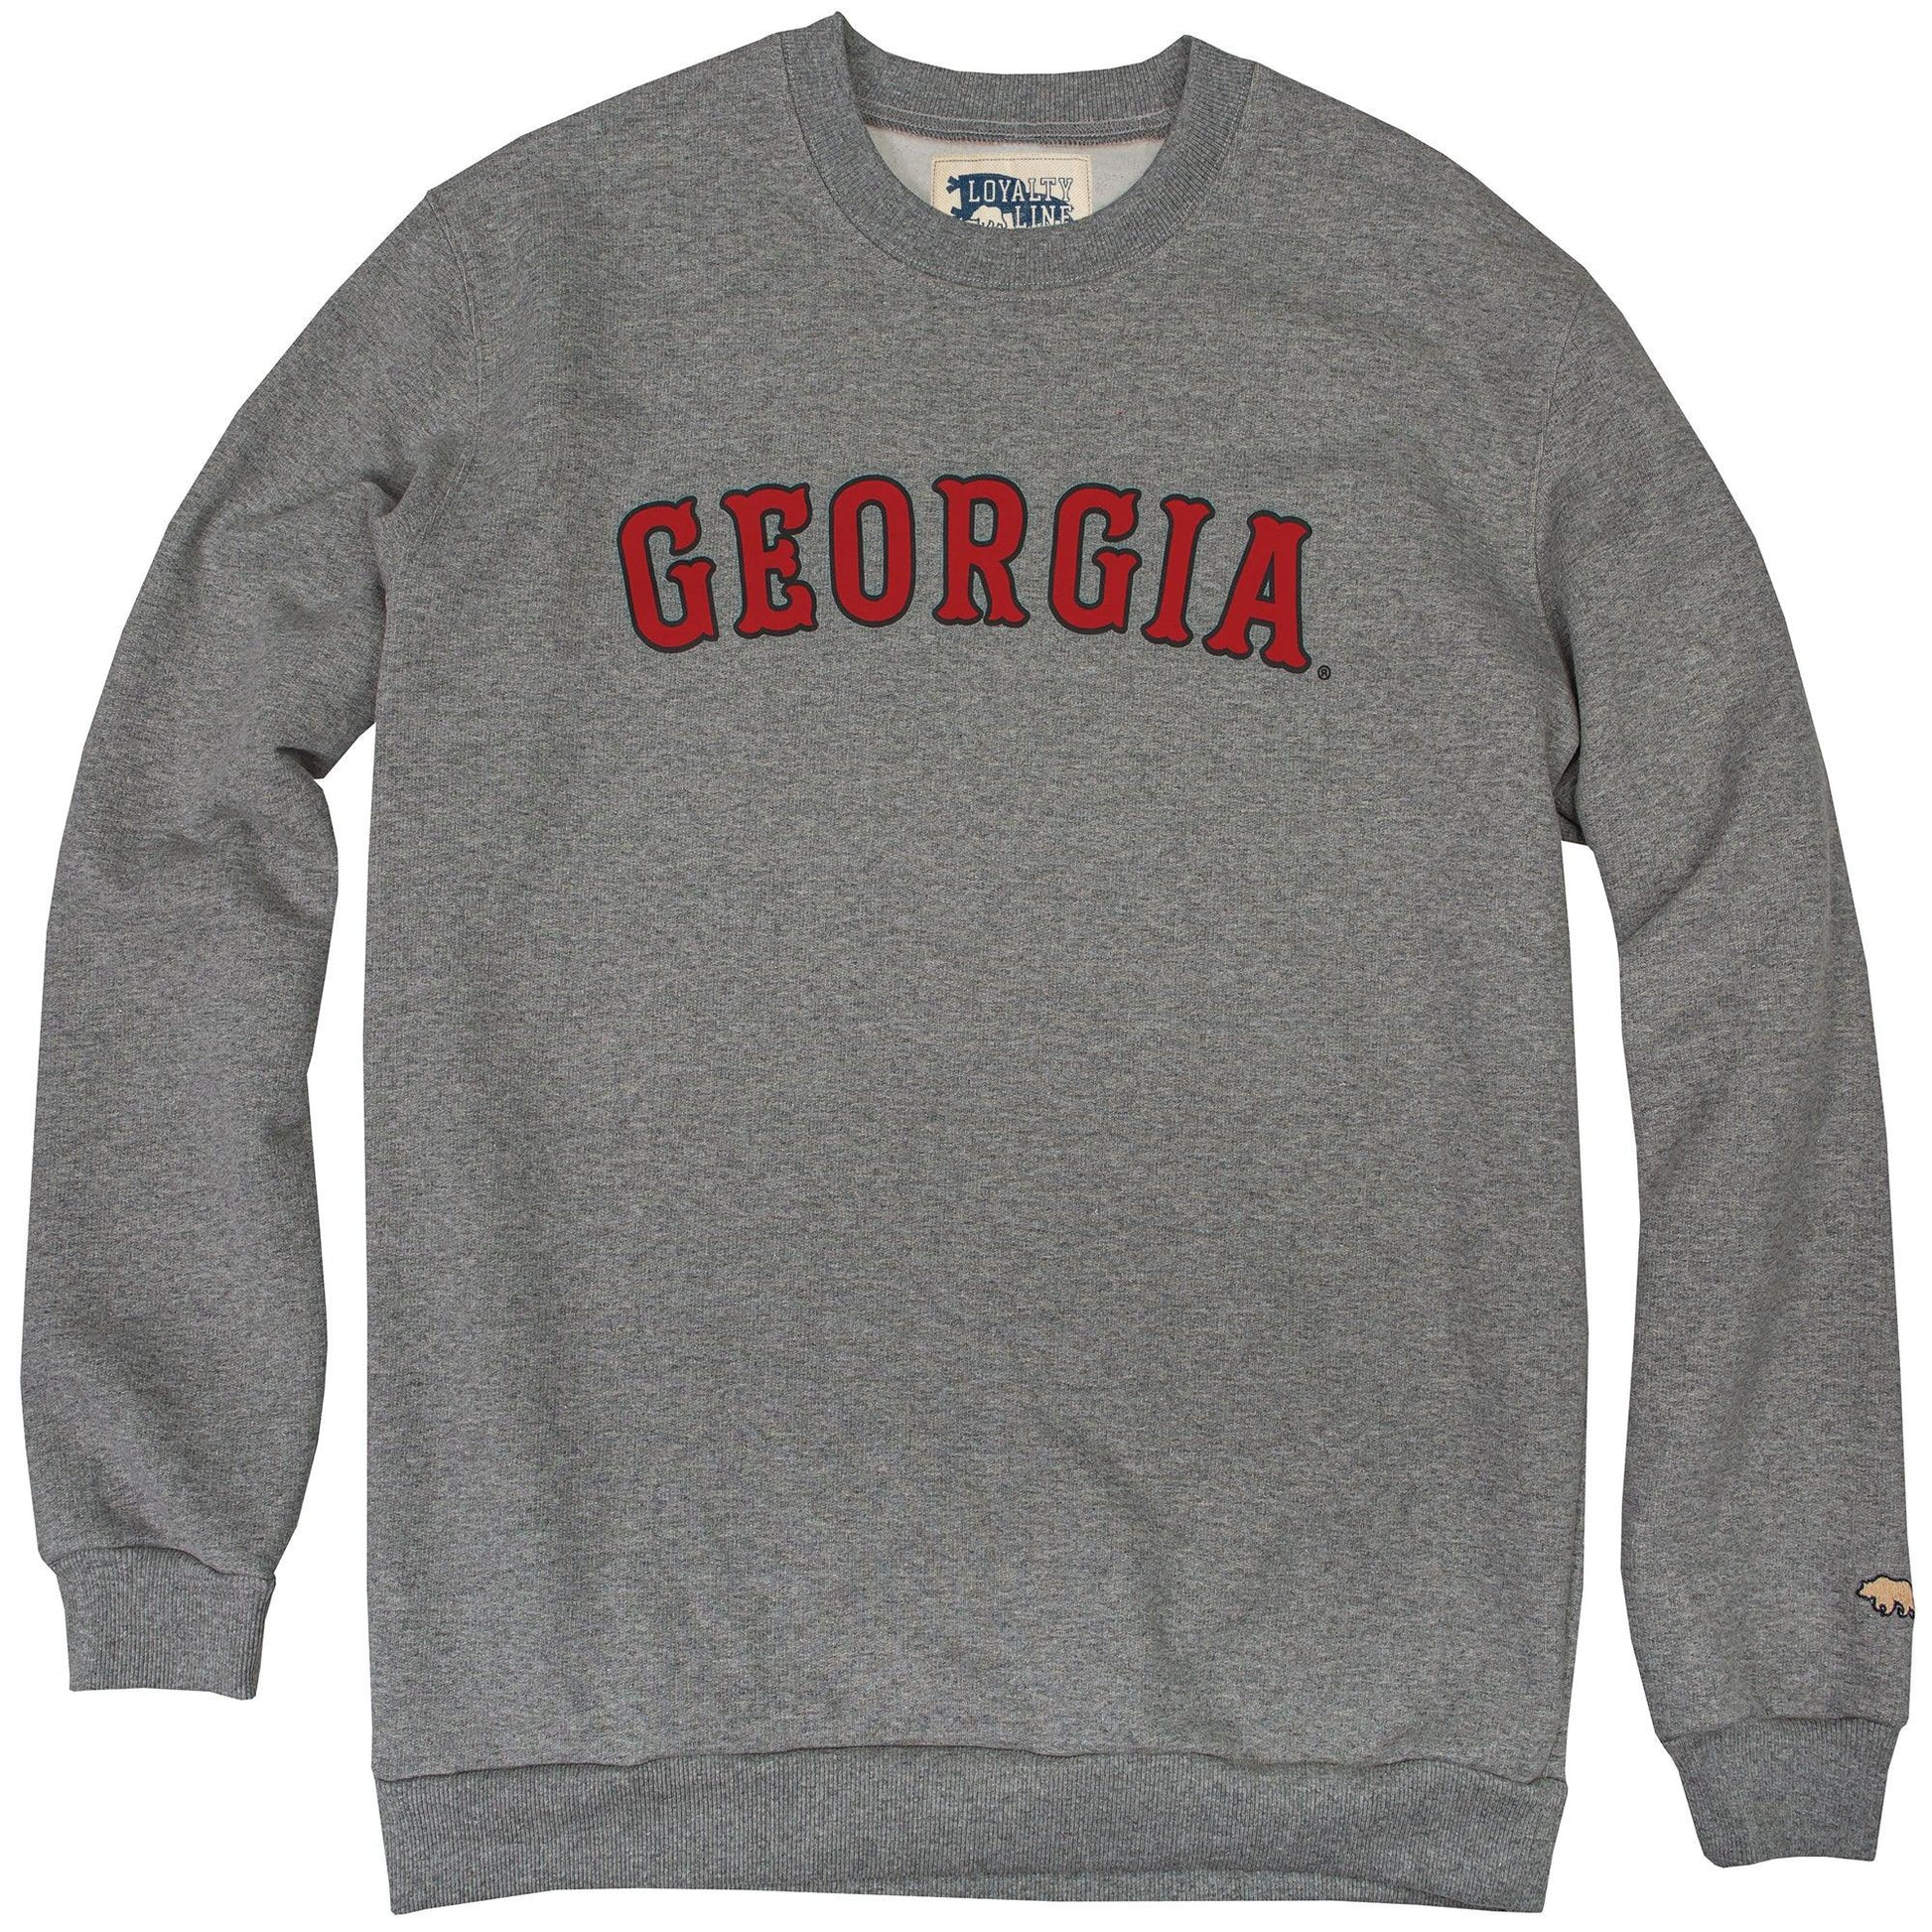 Georgia Vintage Crew Neck Sweatshirt Grey Heather / S